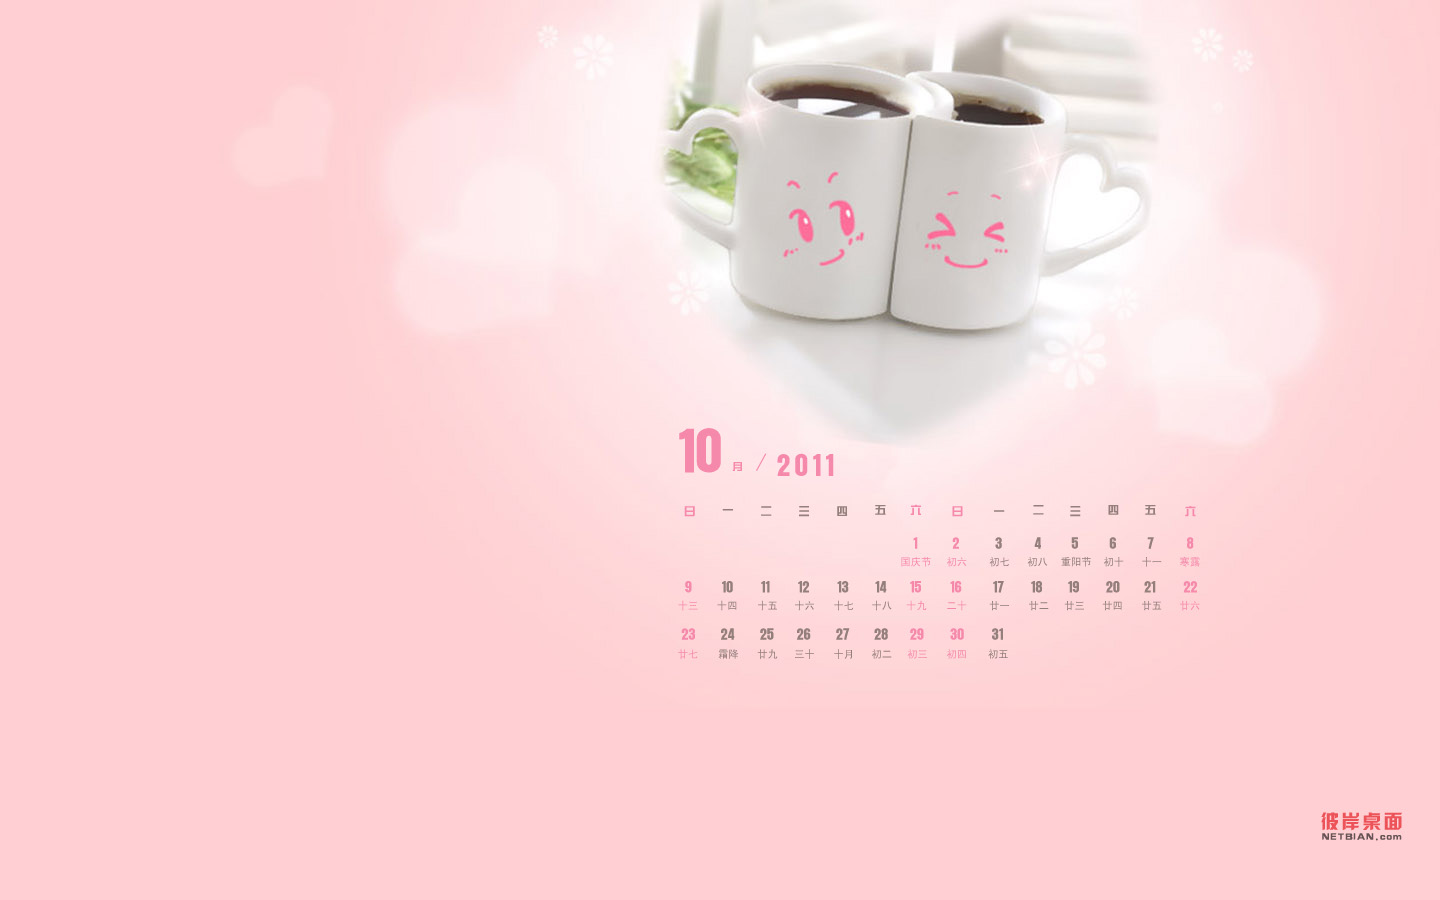 Exciting Coffee October 2011 Desktop Calendar Wallpaper